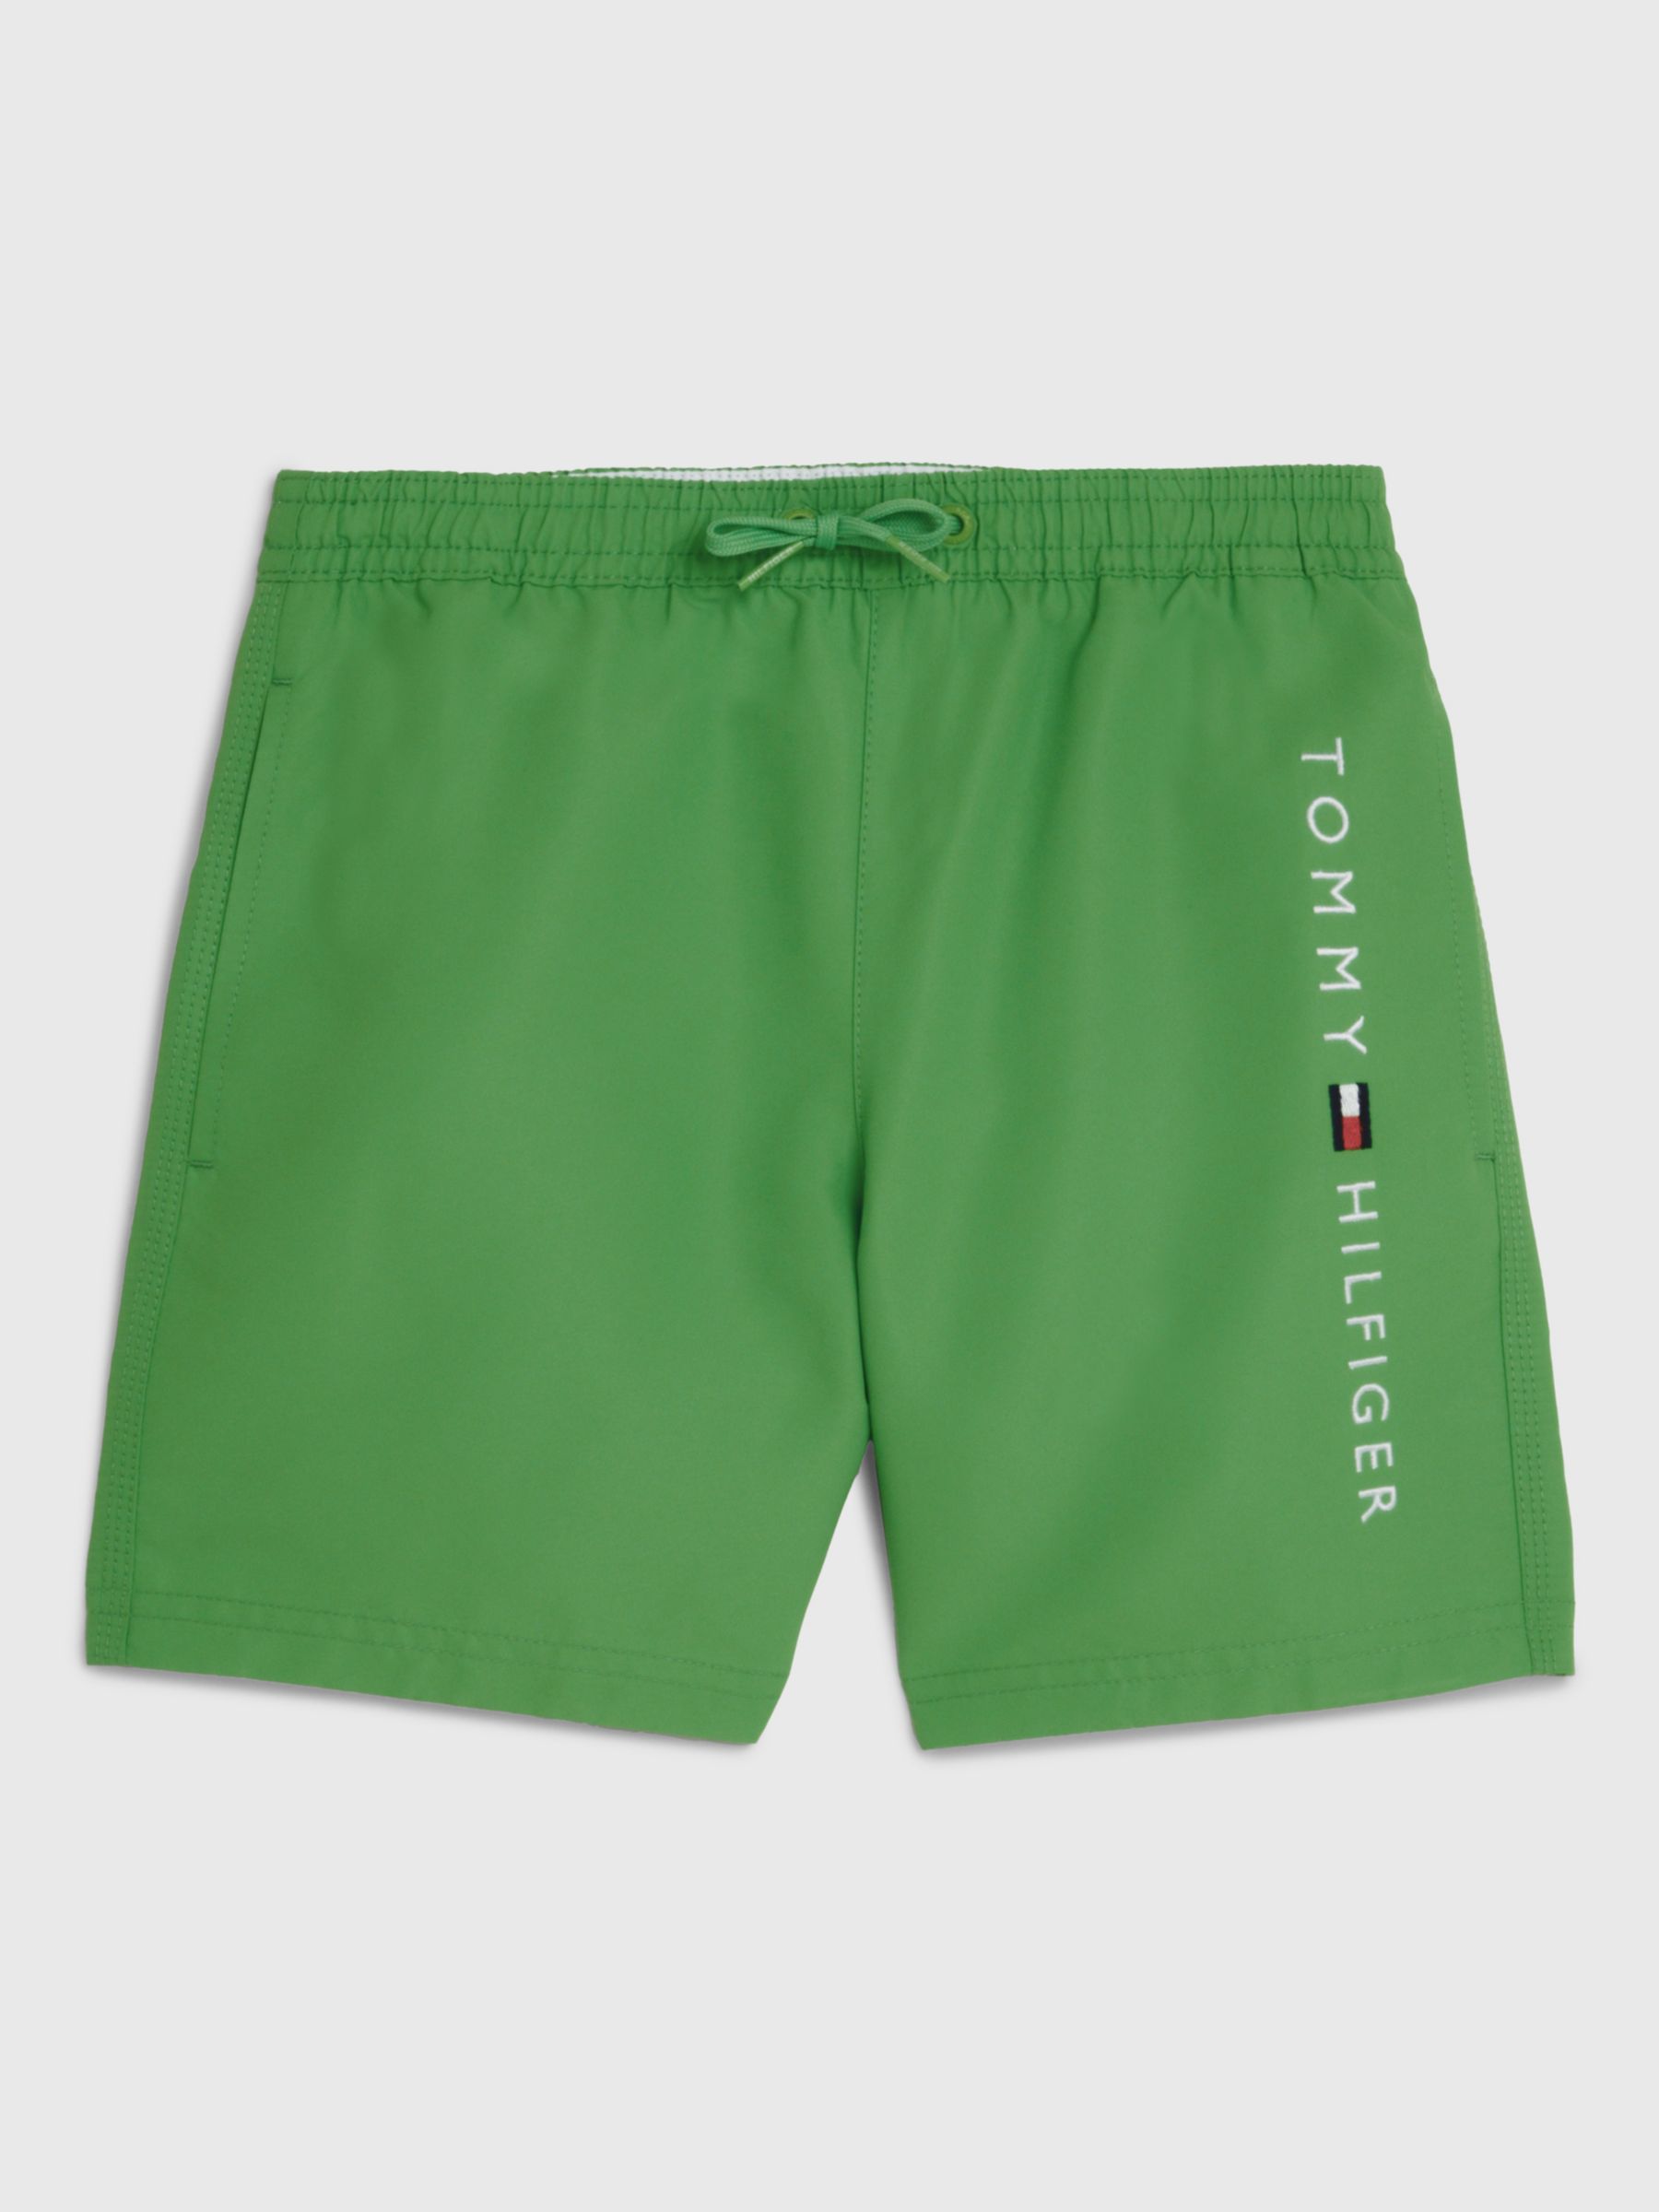 Tommy Hilfiger Kids' Logo Swim Shorts, Spring Lime, 8-10 years